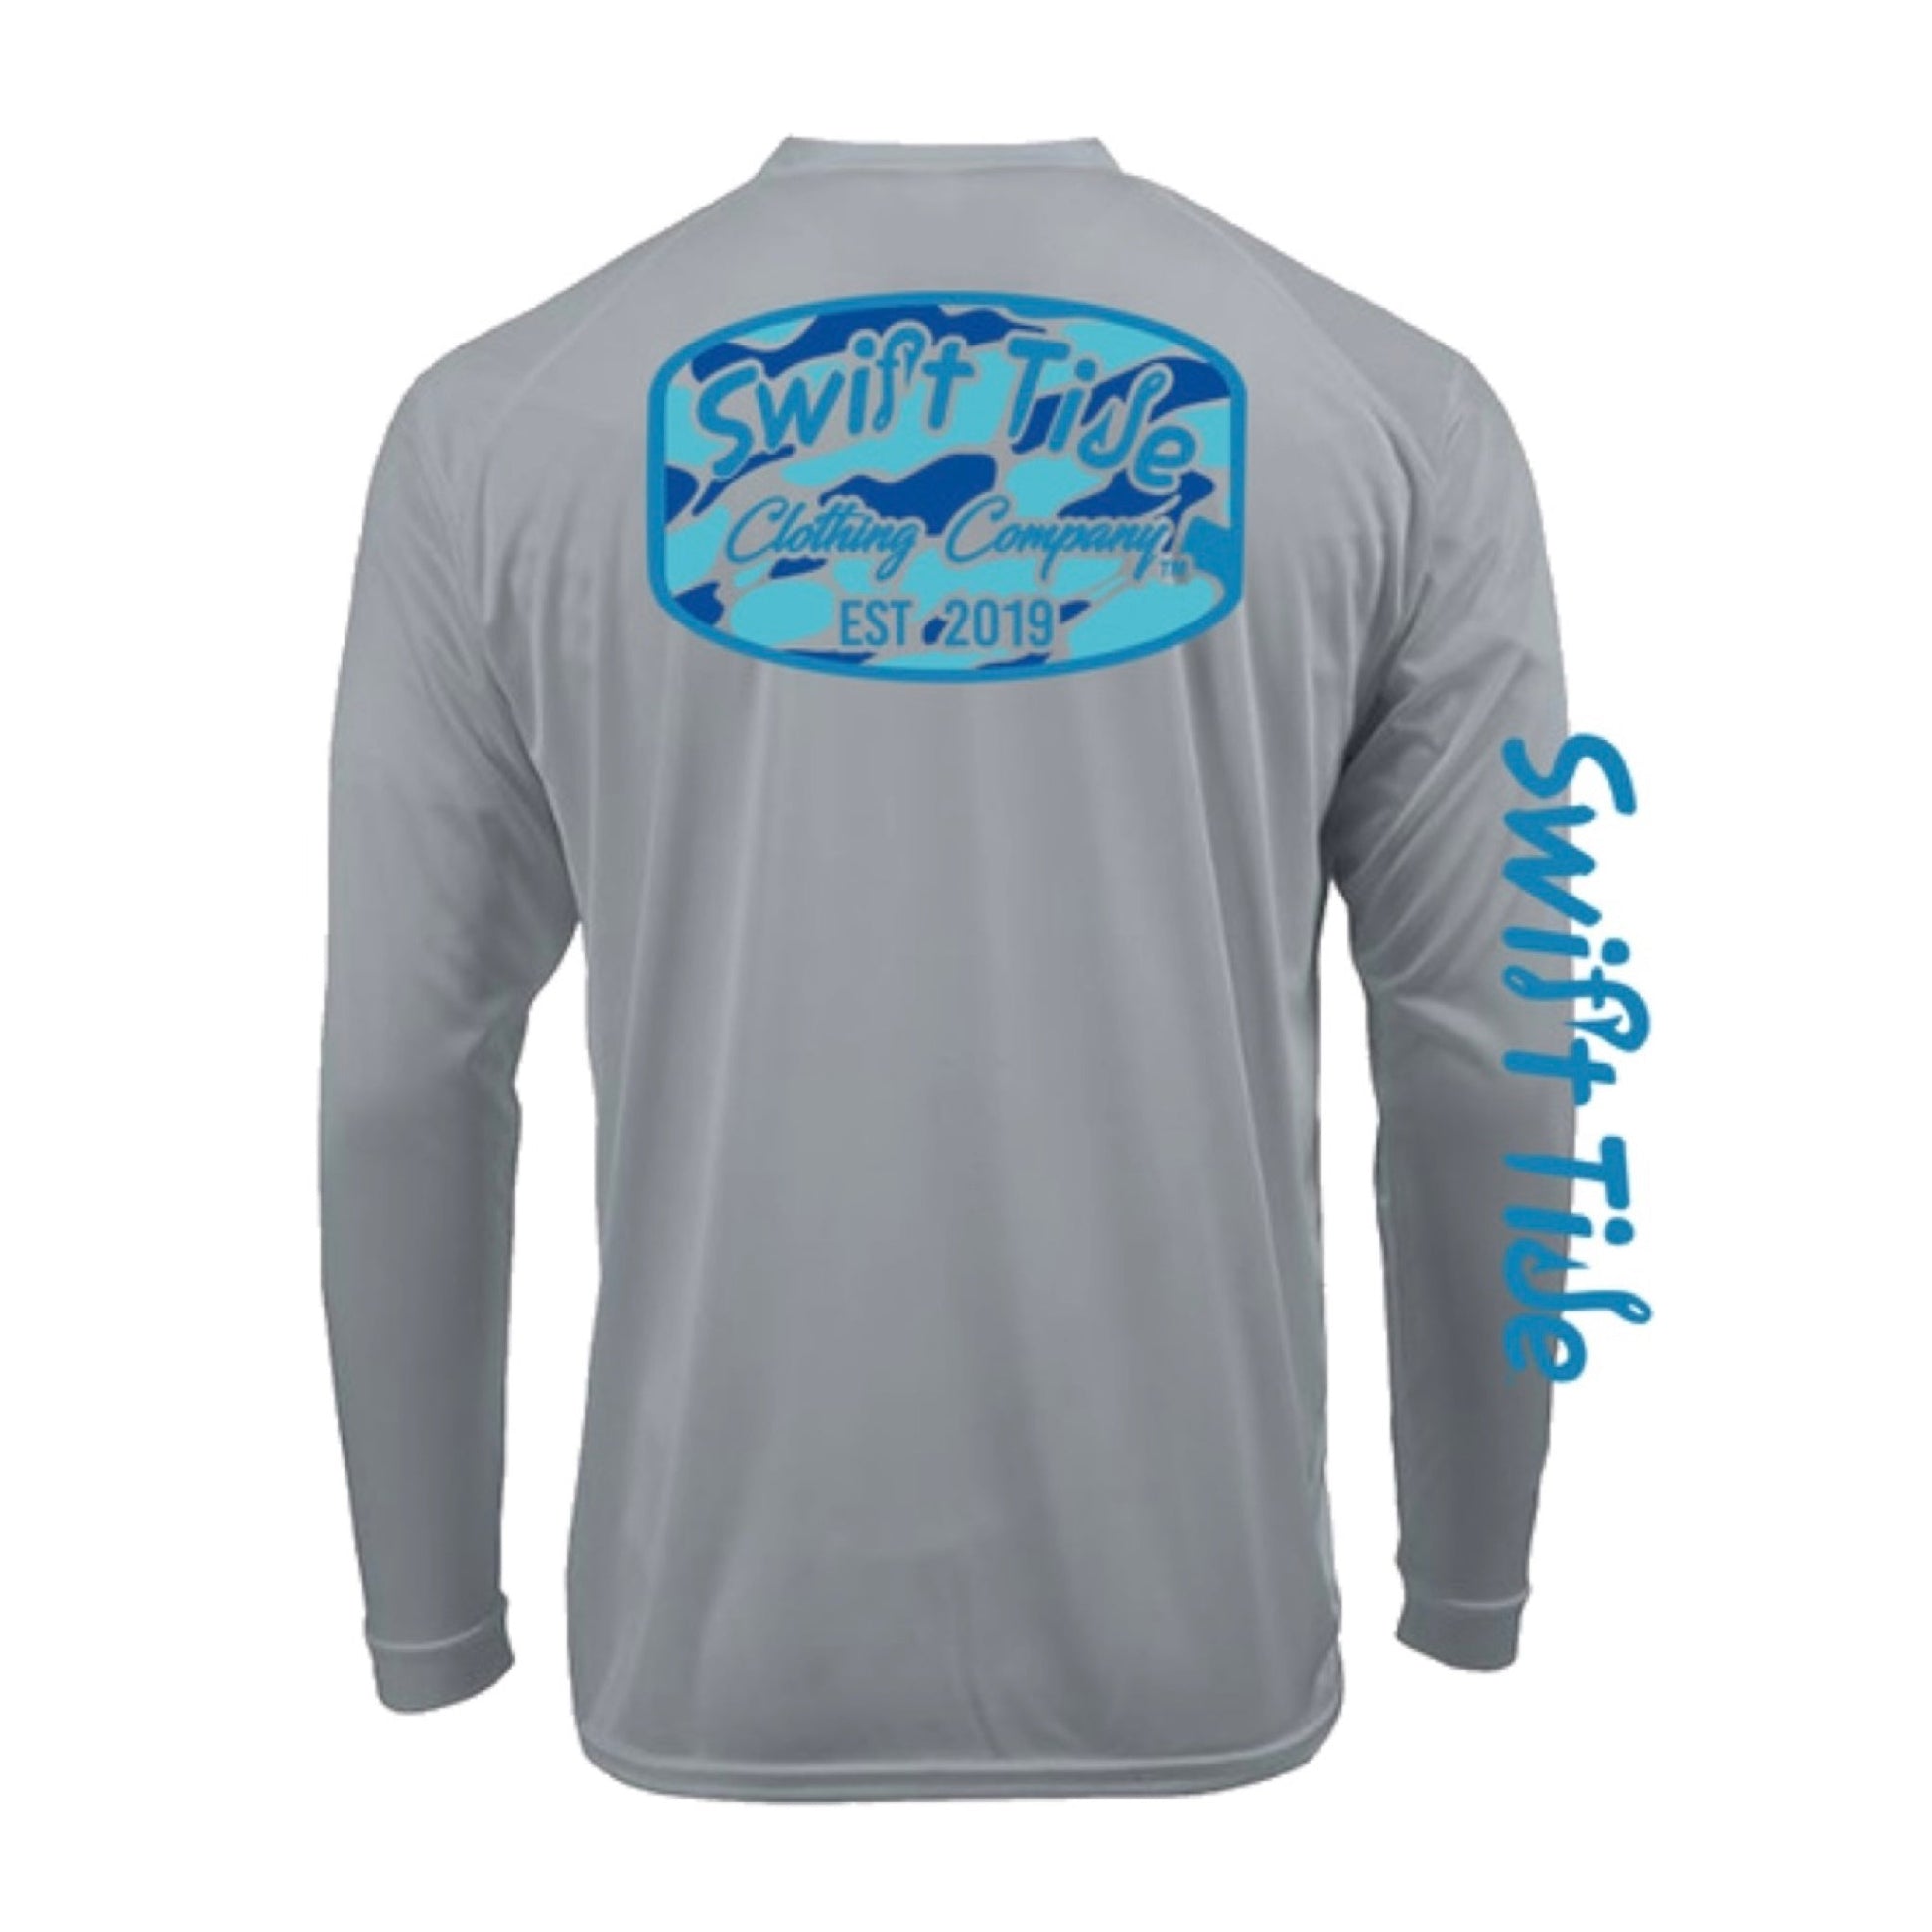 Water Camo Performance T-shirt - Swift Tide Clothing Company